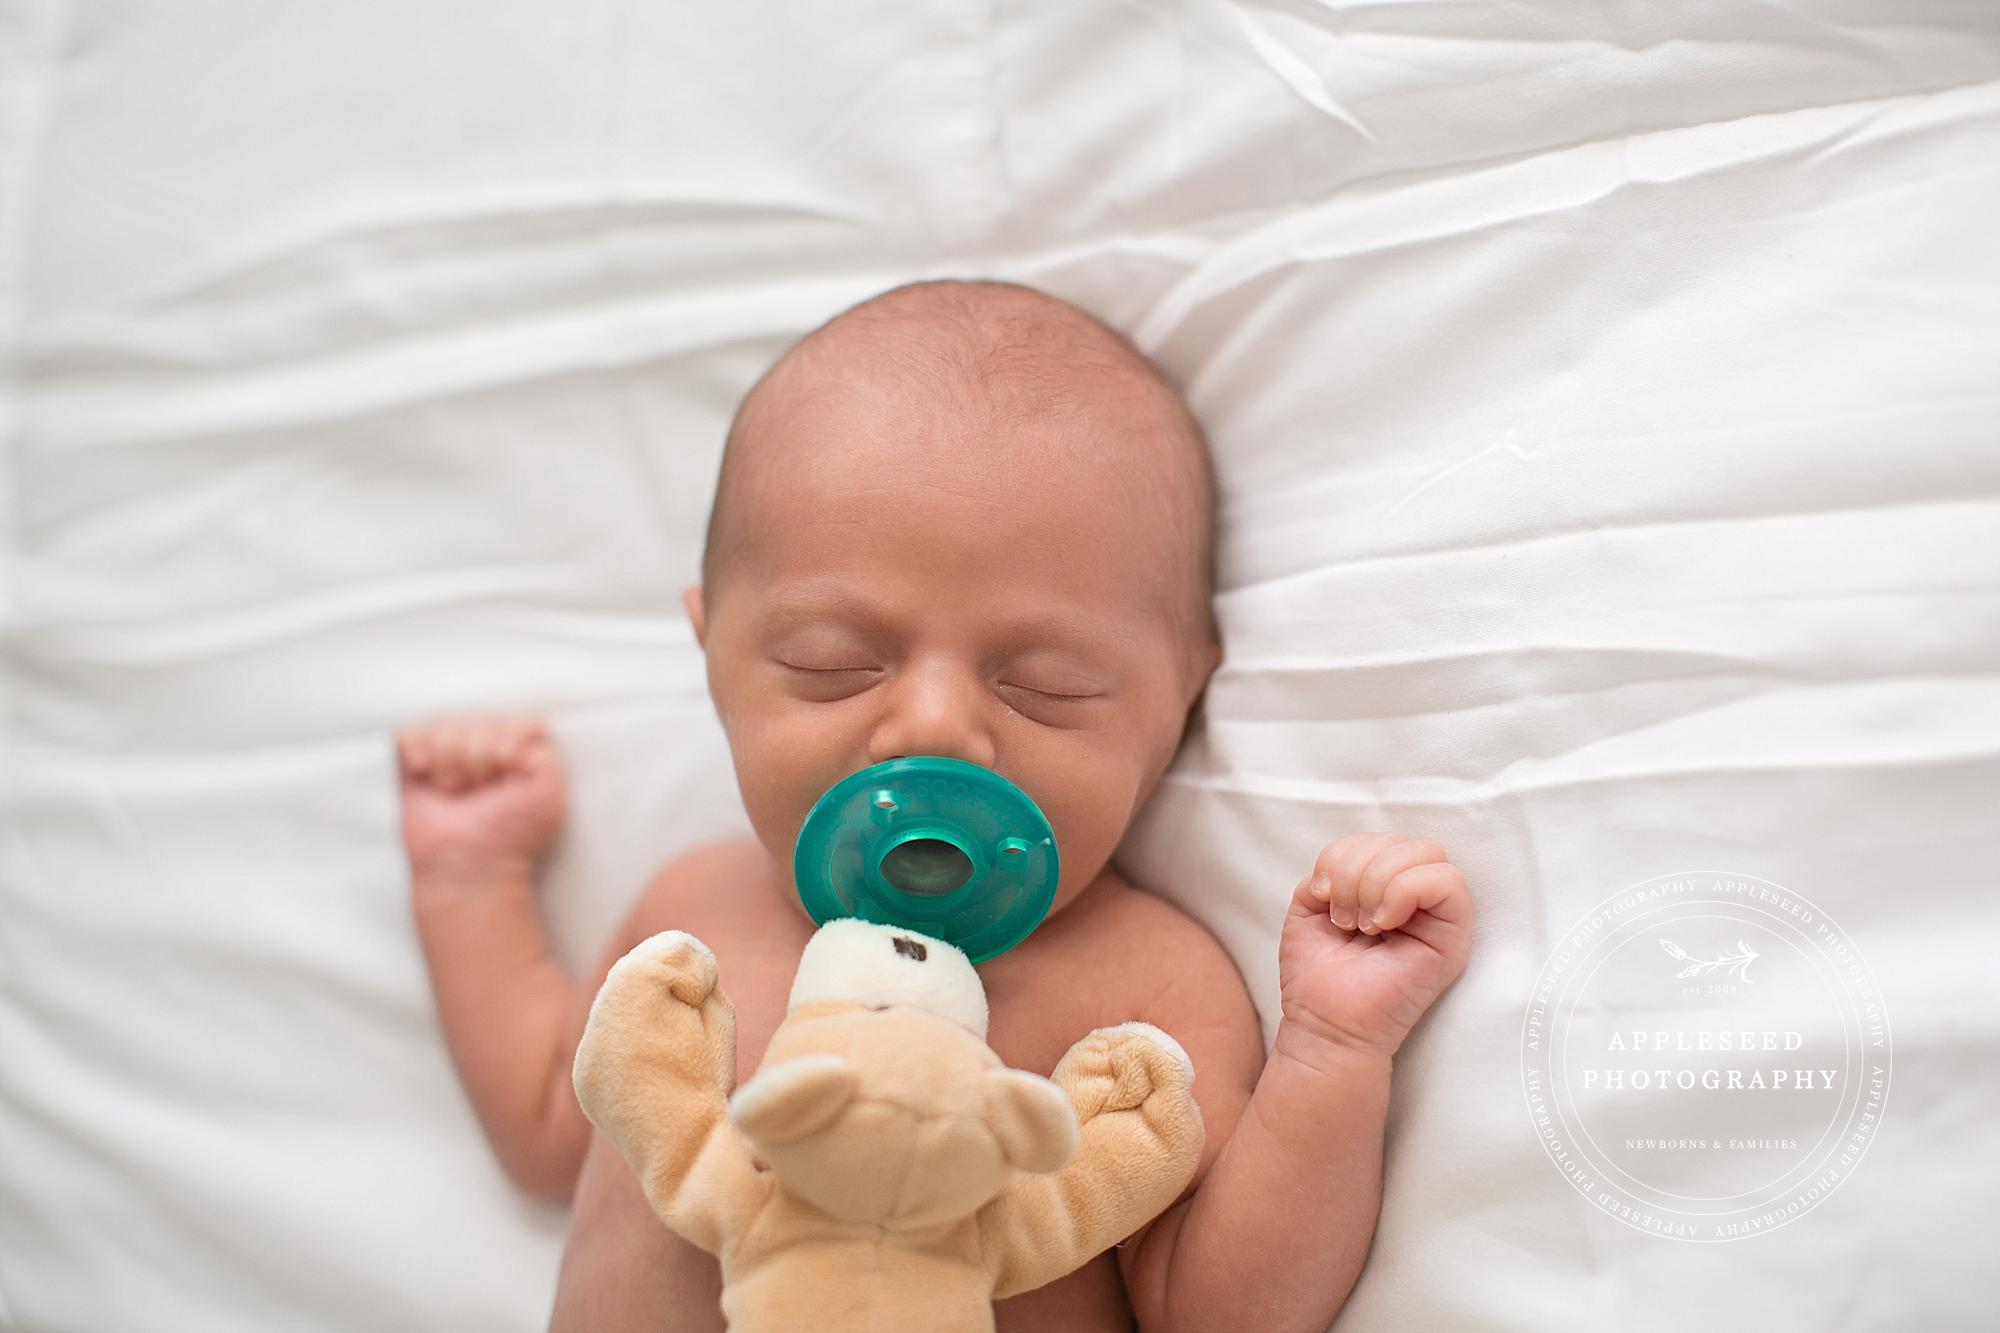 Atlanta Newborn Photographer | Baby John | Appleseed Photography